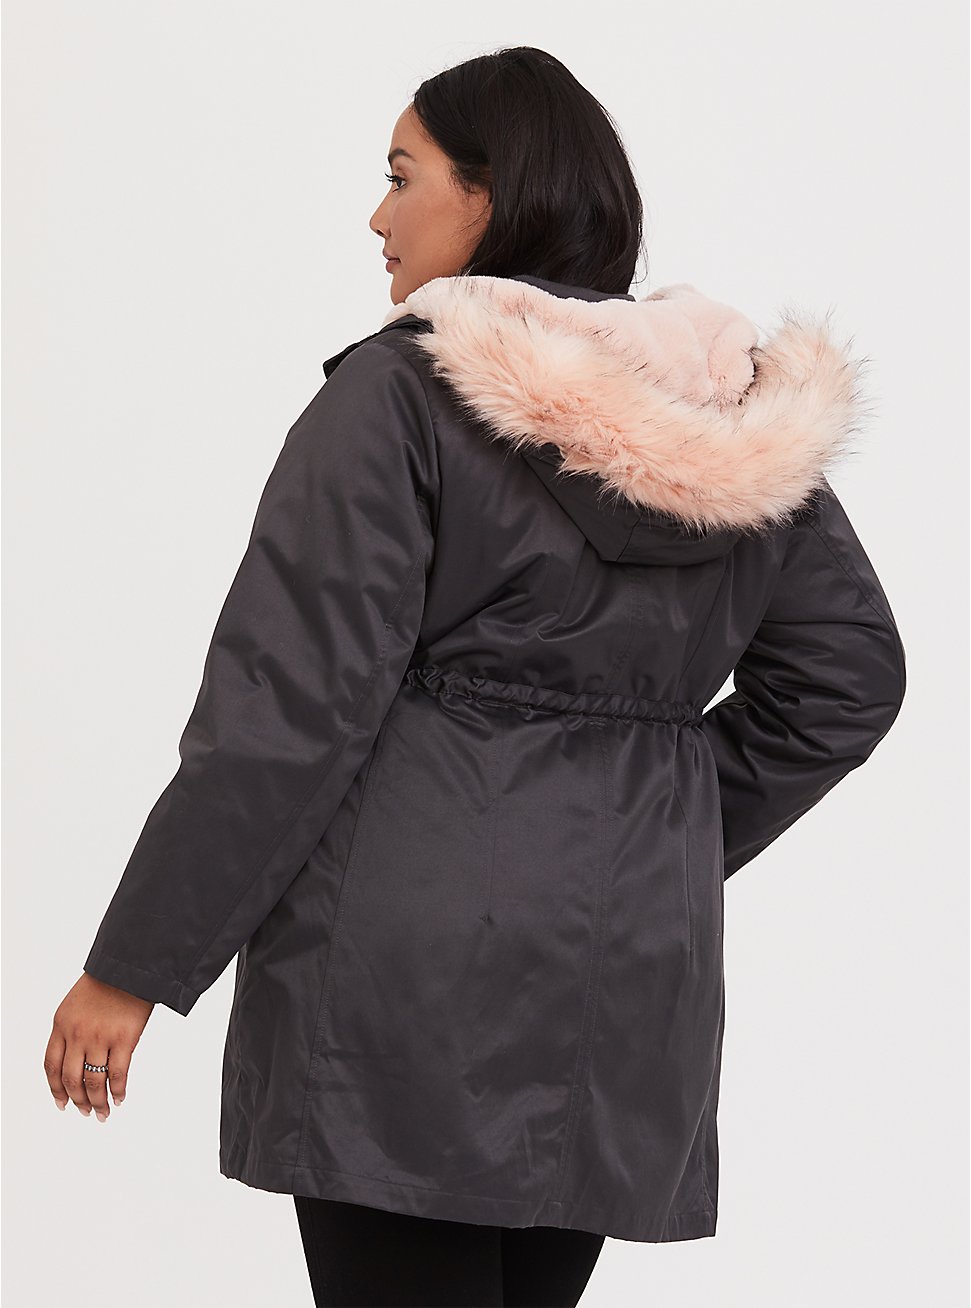 Plus Size - Grey Twill & Pink Faux Fur Trim 3-In-1 Parka - Torrid